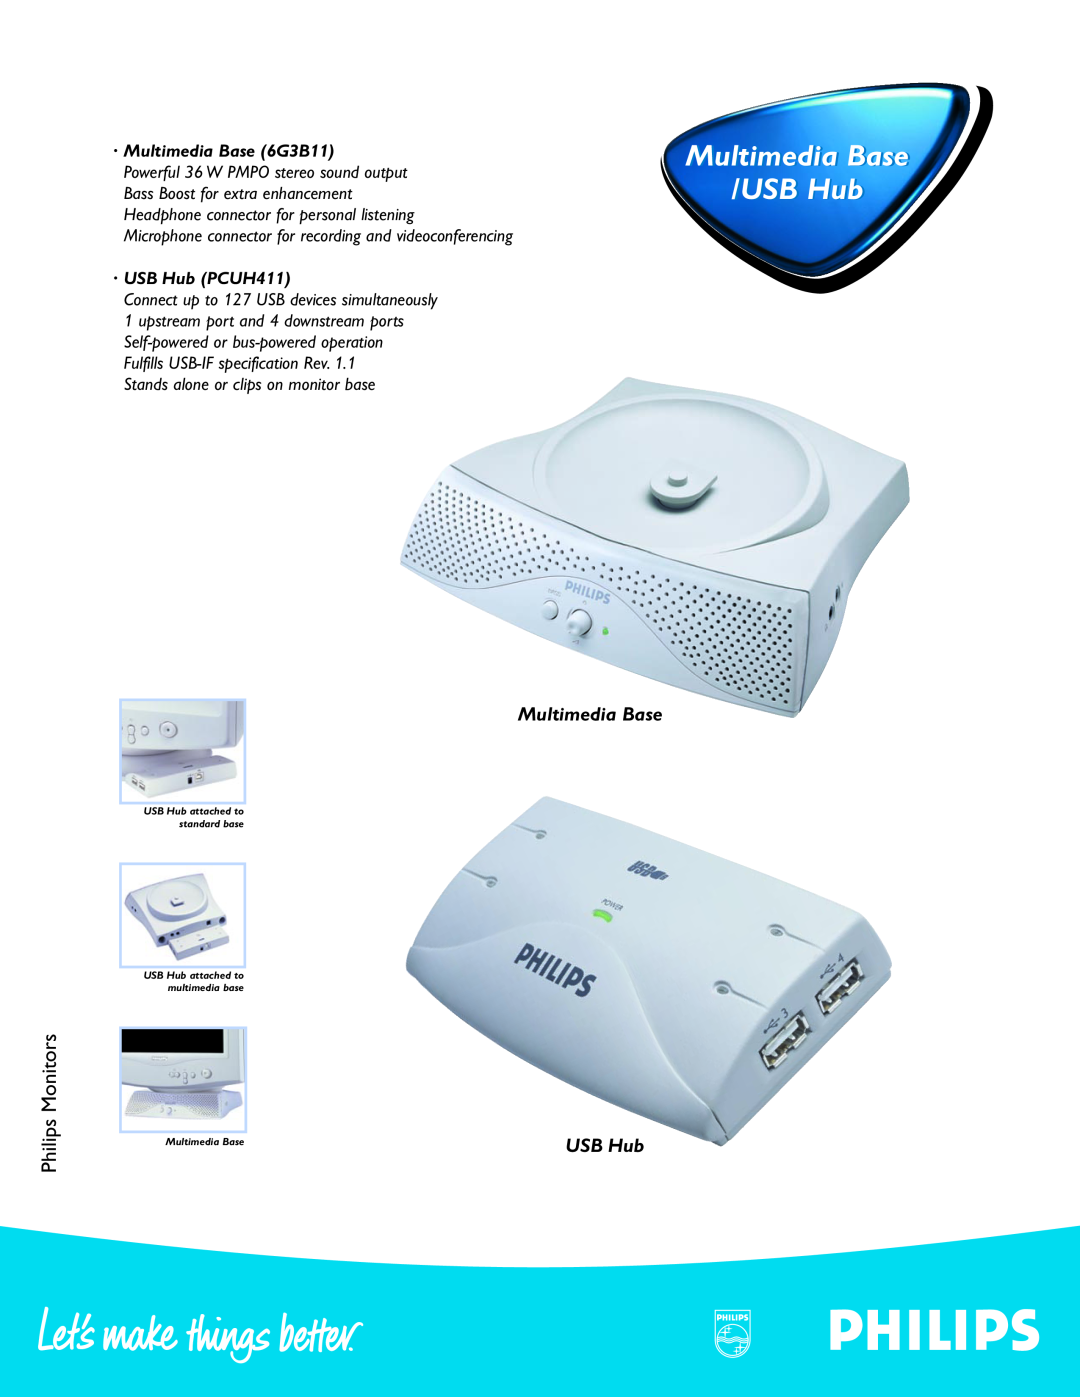 Philips manual Multimedia Base USB Hub, Philips Monitors, ·Multimedia Base 6G3B11, ·USB Hub PCUH411 